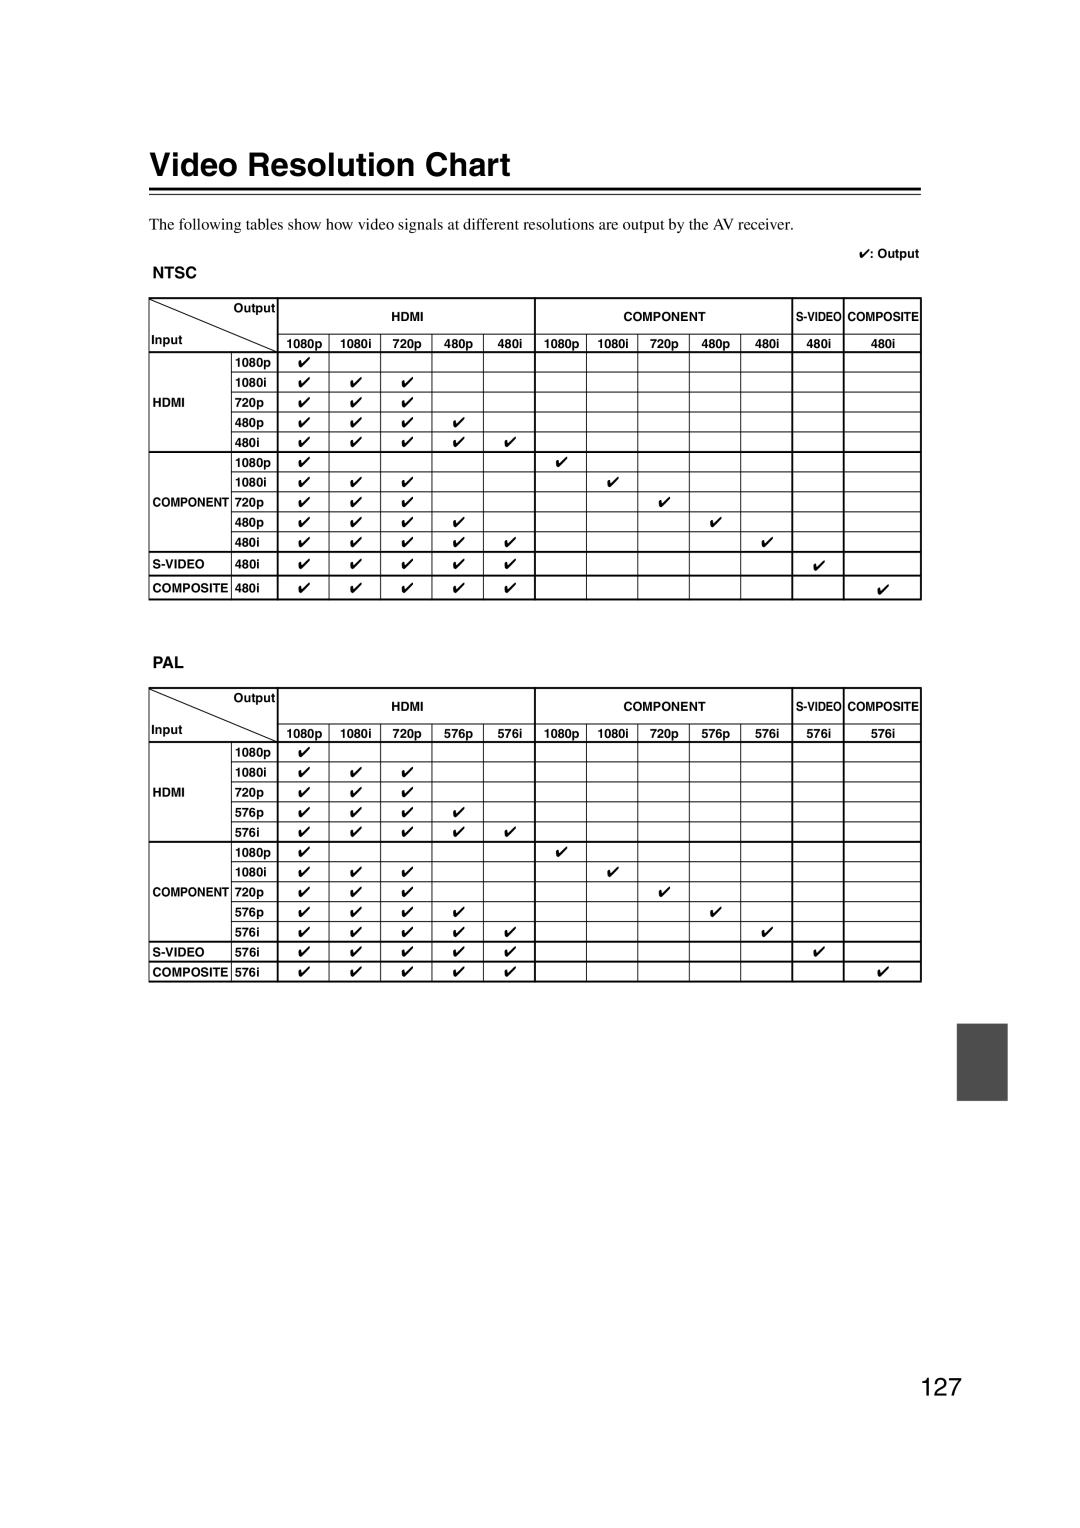 Onkyo TX-SR707 instruction manual Video Resolution Chart, Ntsc 